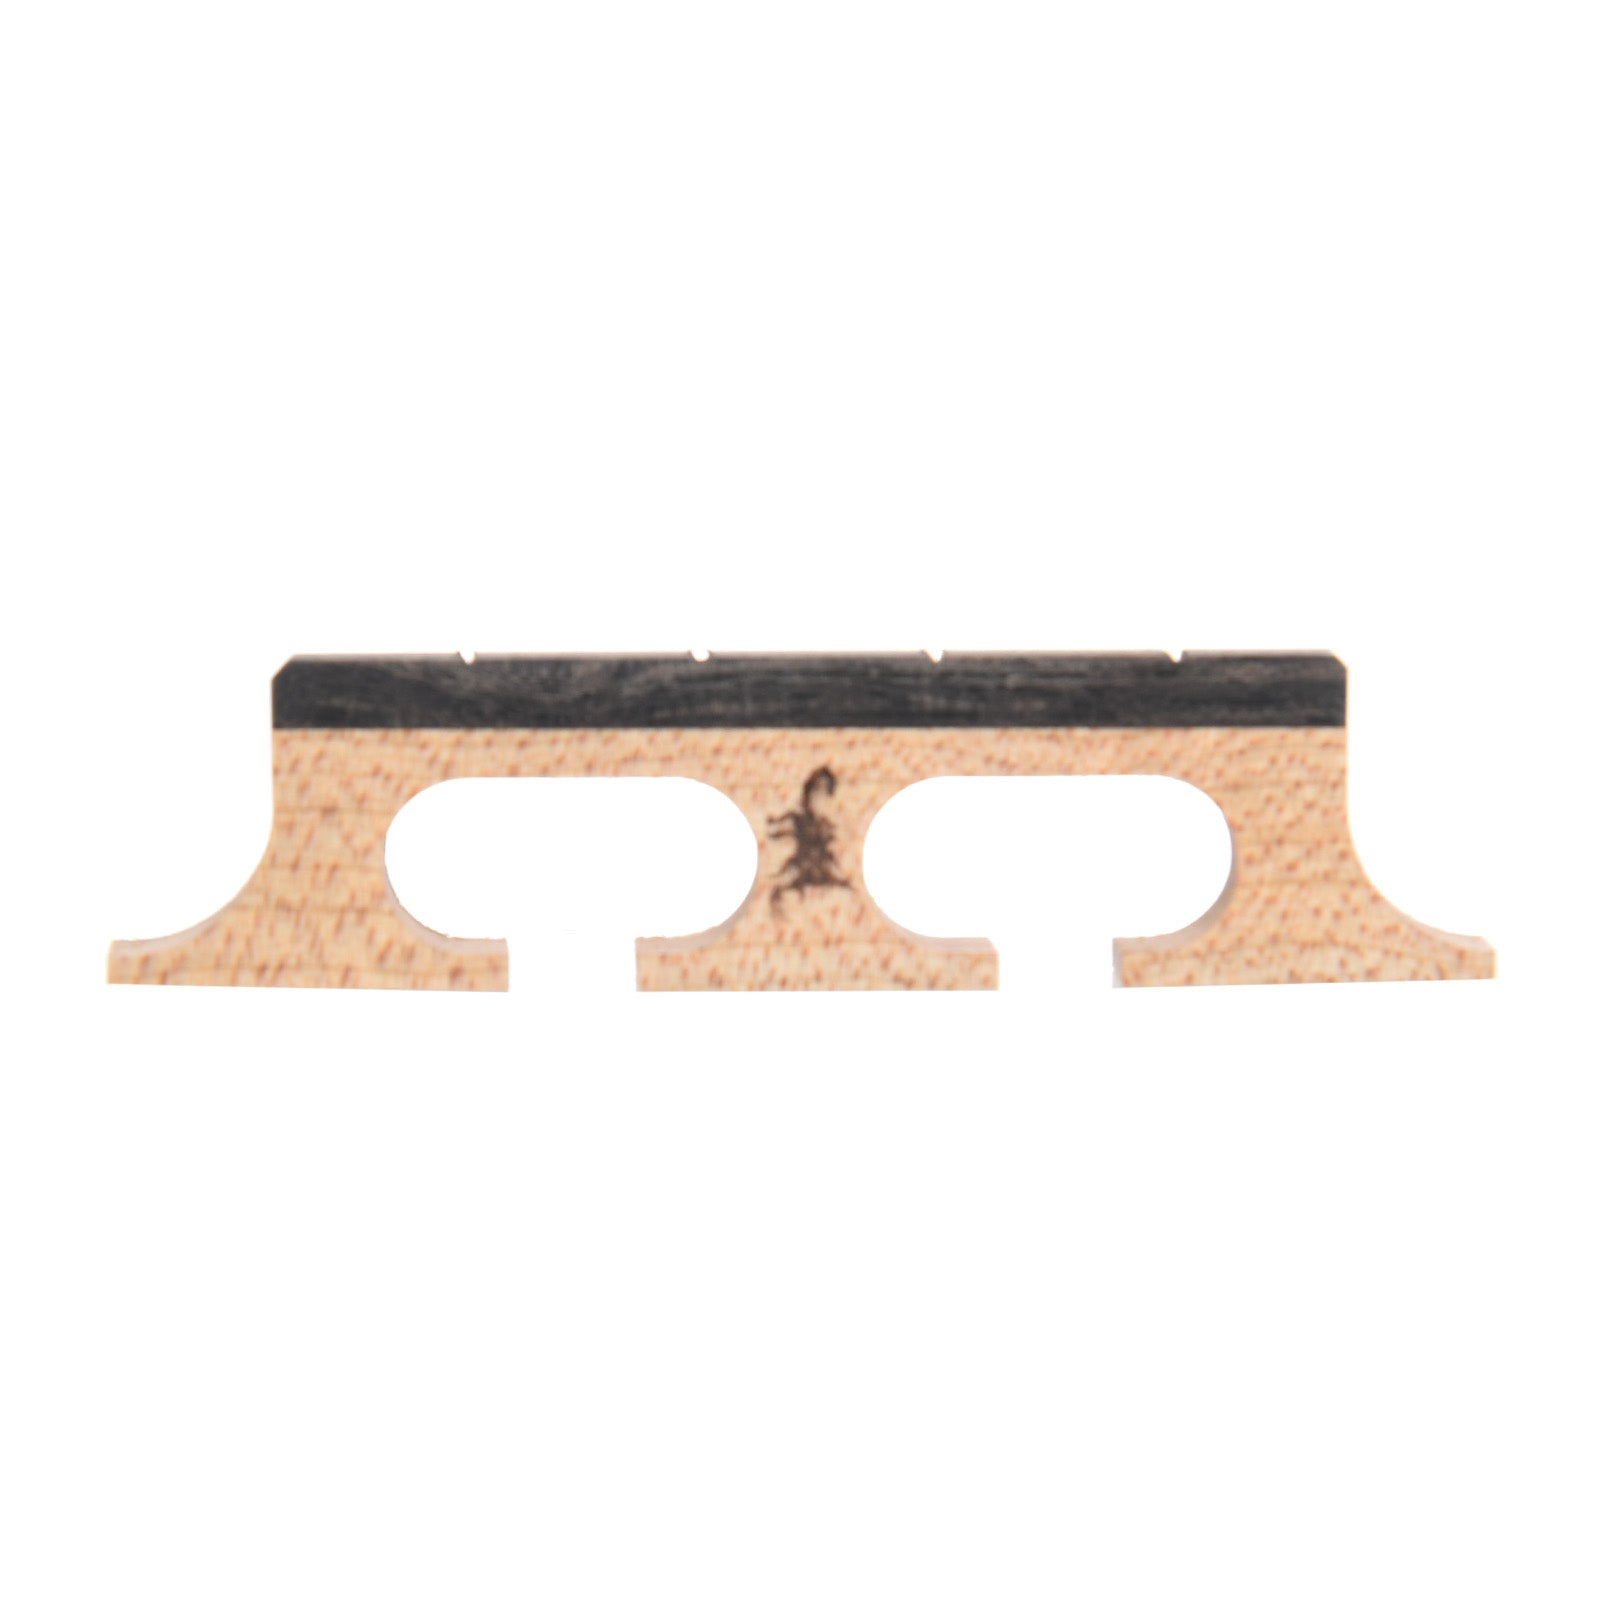 Image 2 of Scorpion Tenor Banjo Bridge - 1/2" Tall- SKU# SCTB-12 : Product Type Accessories & Parts : Elderly Instruments